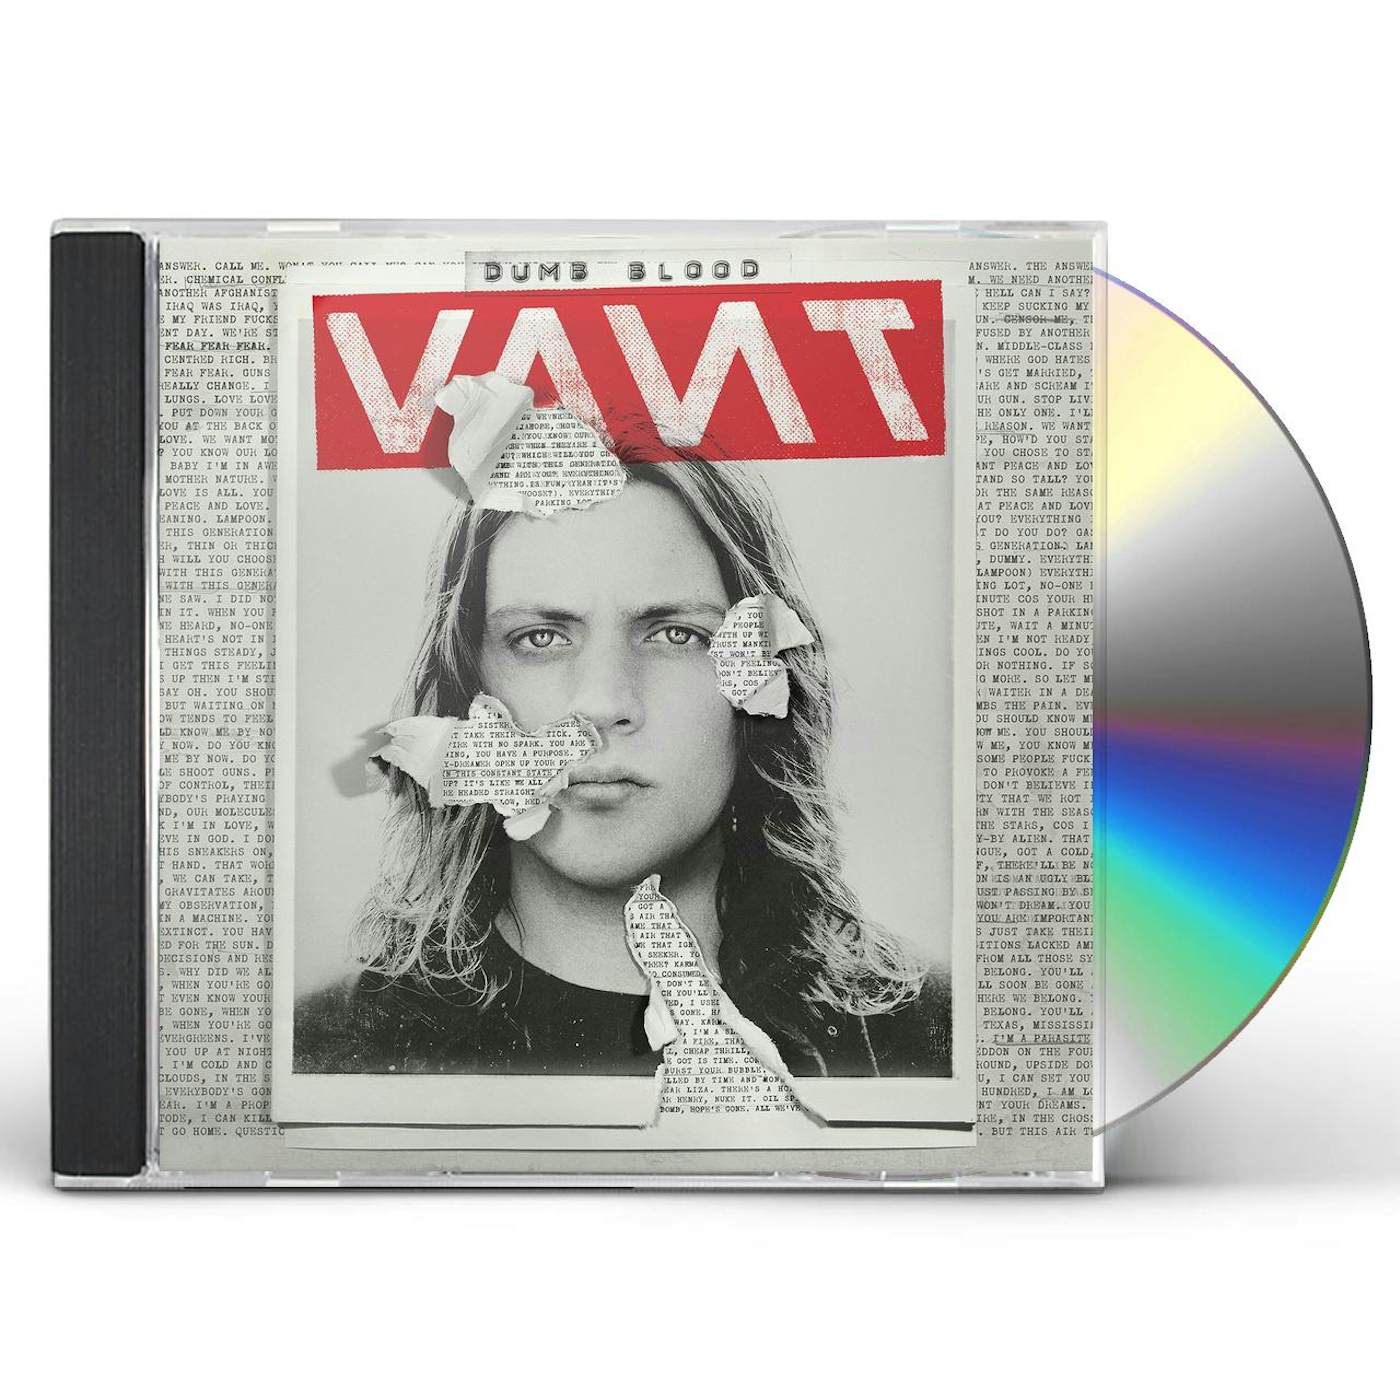 VANT DUMB BLOOD (DELUXE EDITION) CD